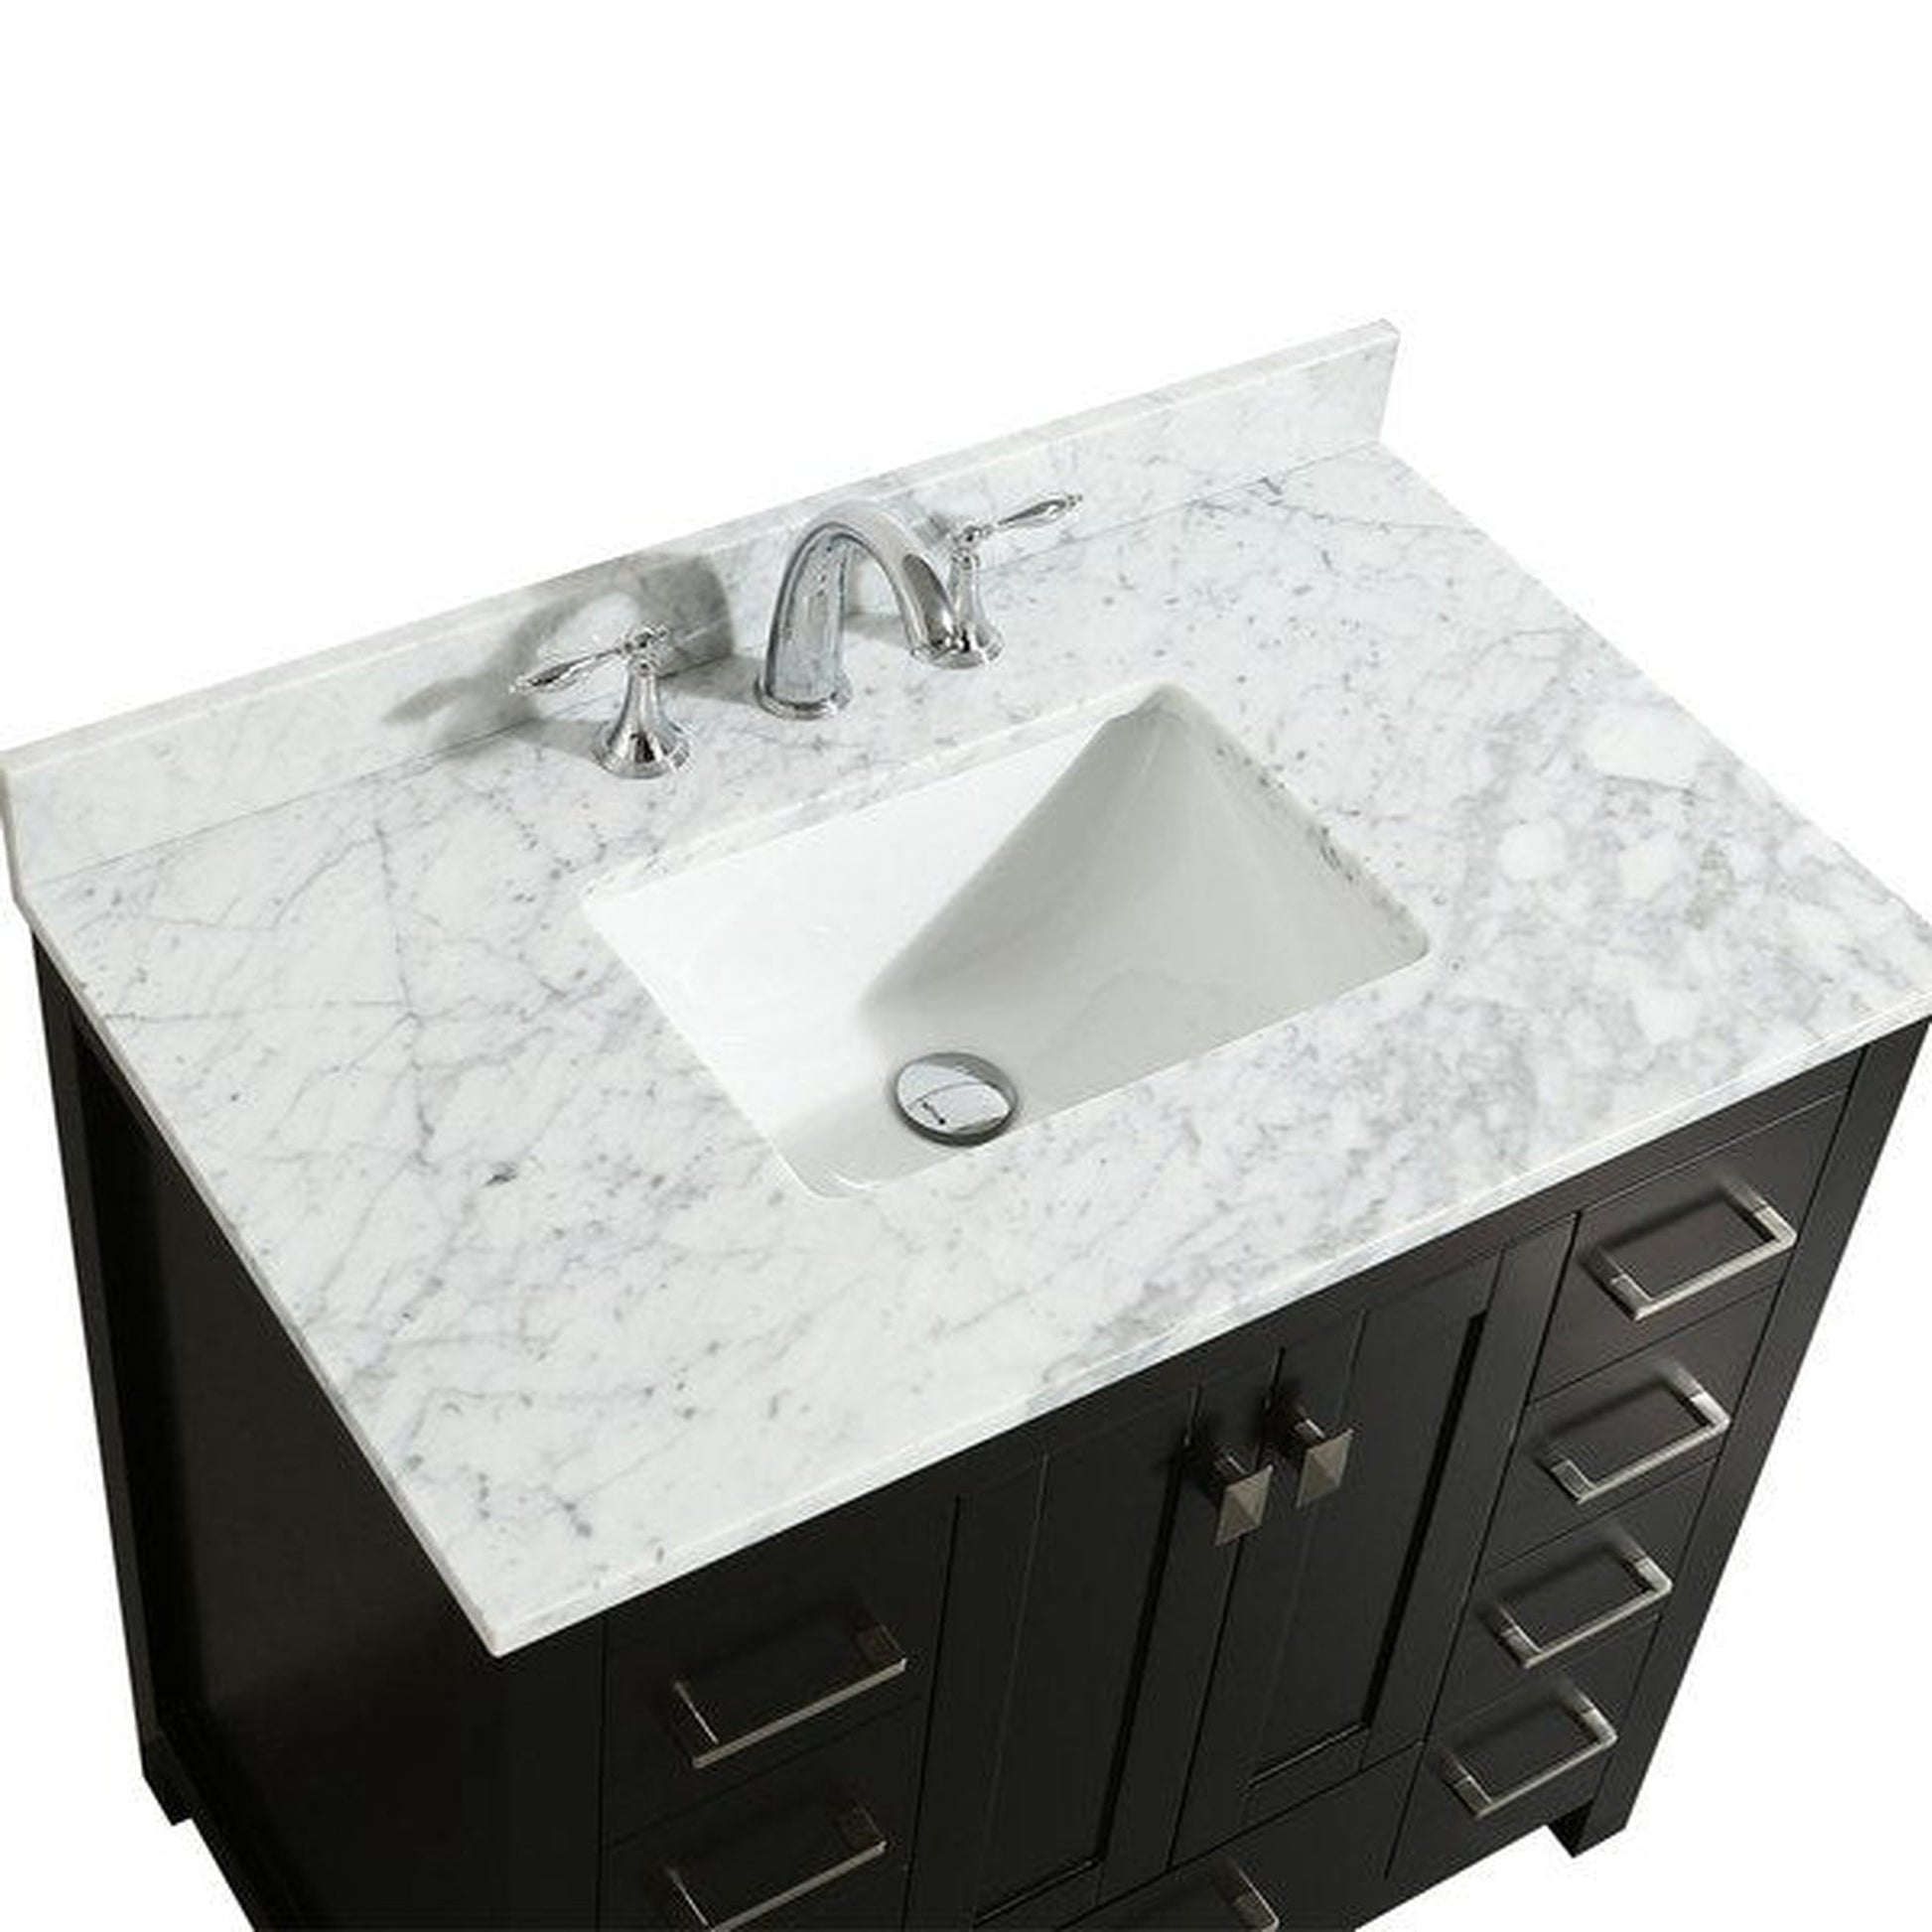 Eviva Hampton 36" x 34" Espresso Freestanding Bathroom Vanity with Marble Carrara Countertop and Single Undermount Sink